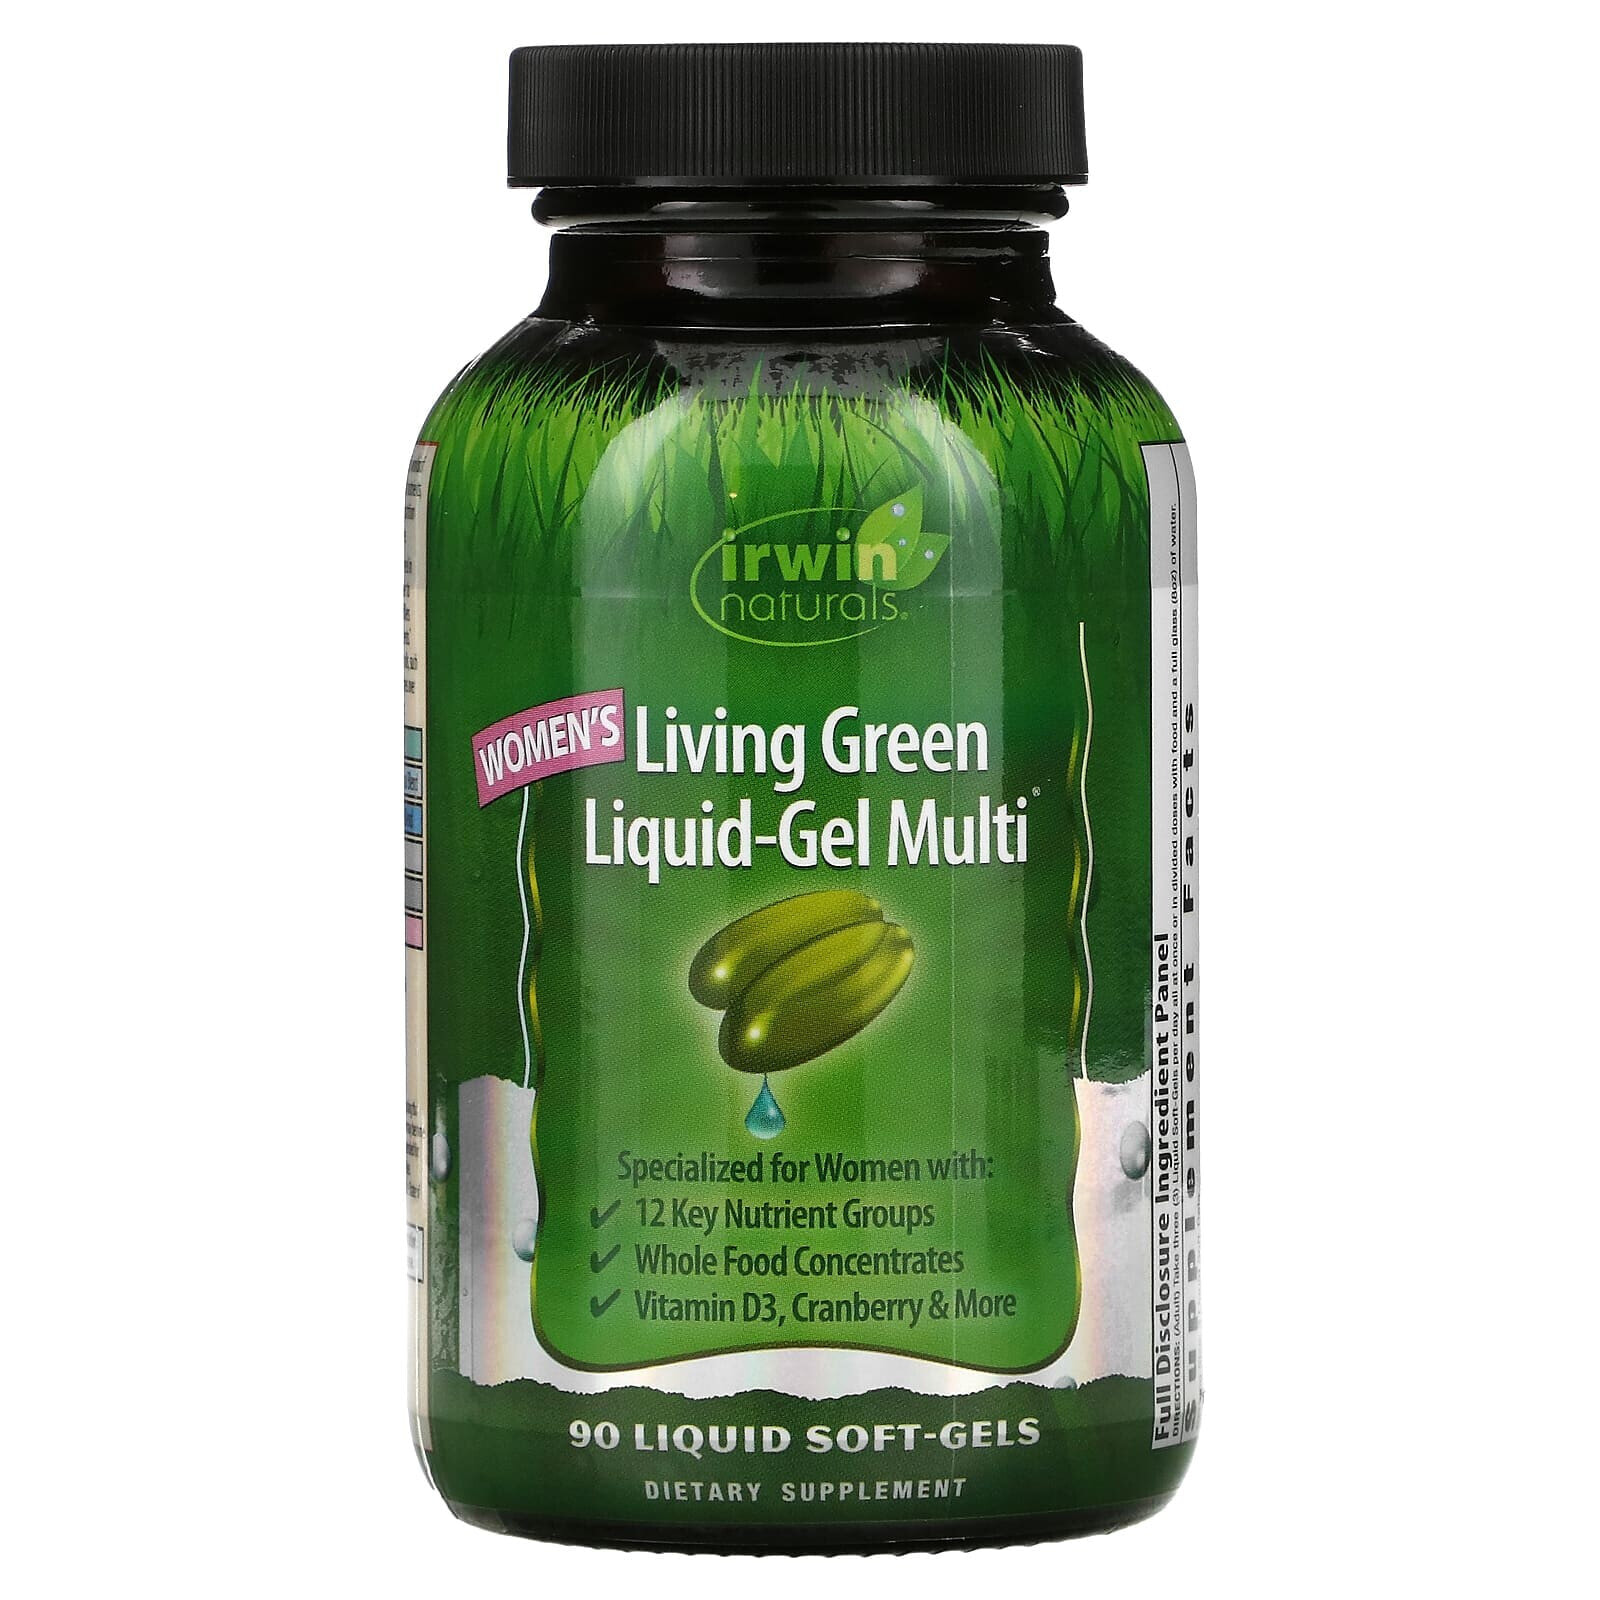 Women's Living Green Liquid-Gel Multi, 120 Liquid Soft-Gels